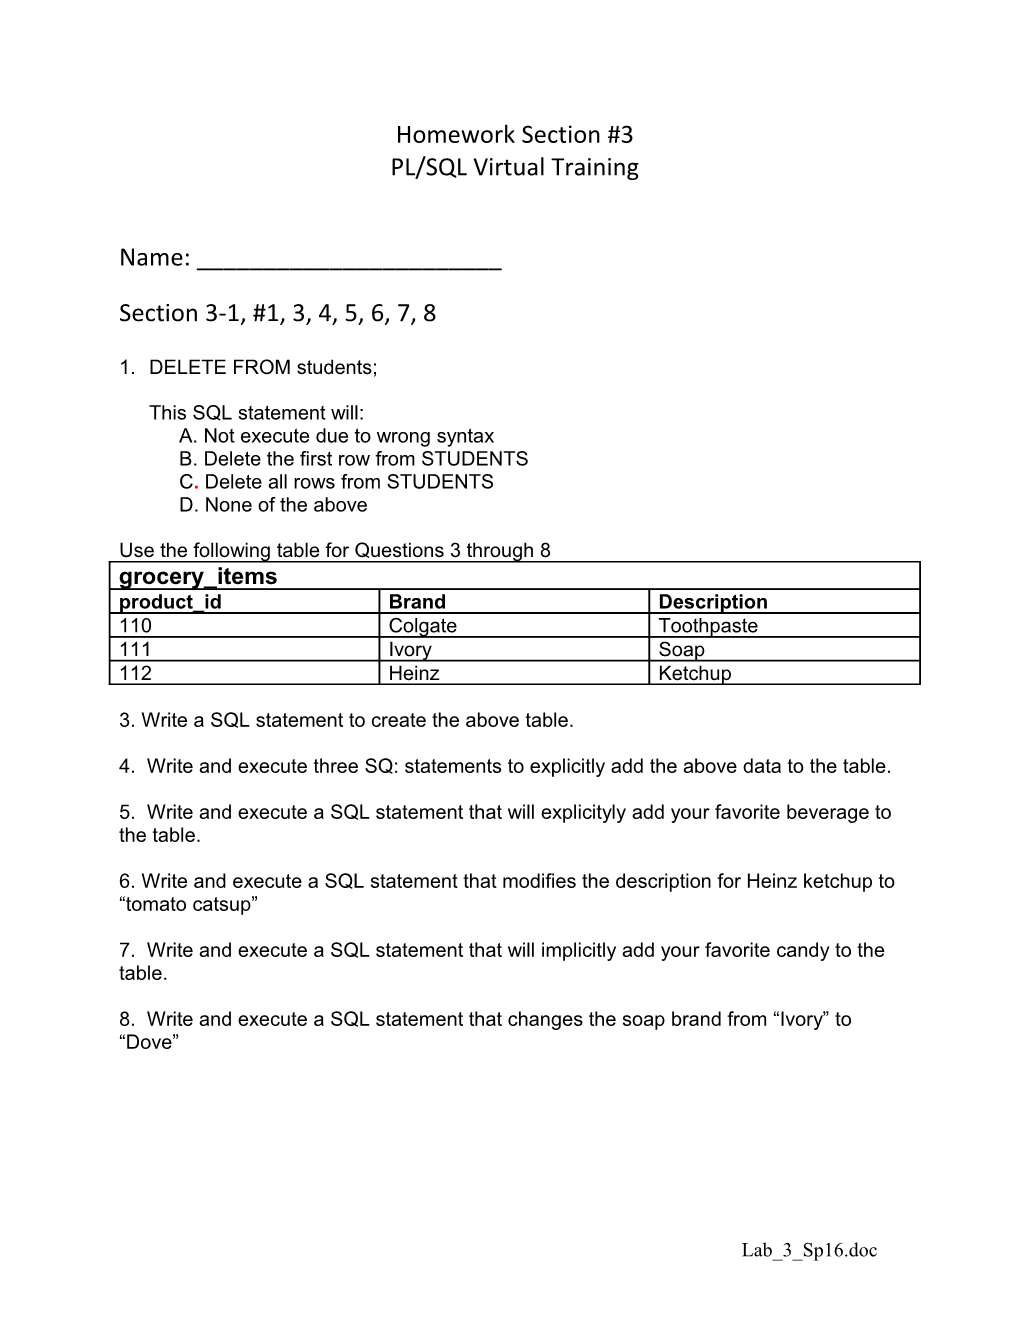 Homework Section #3 PL/SQL Virtual Training